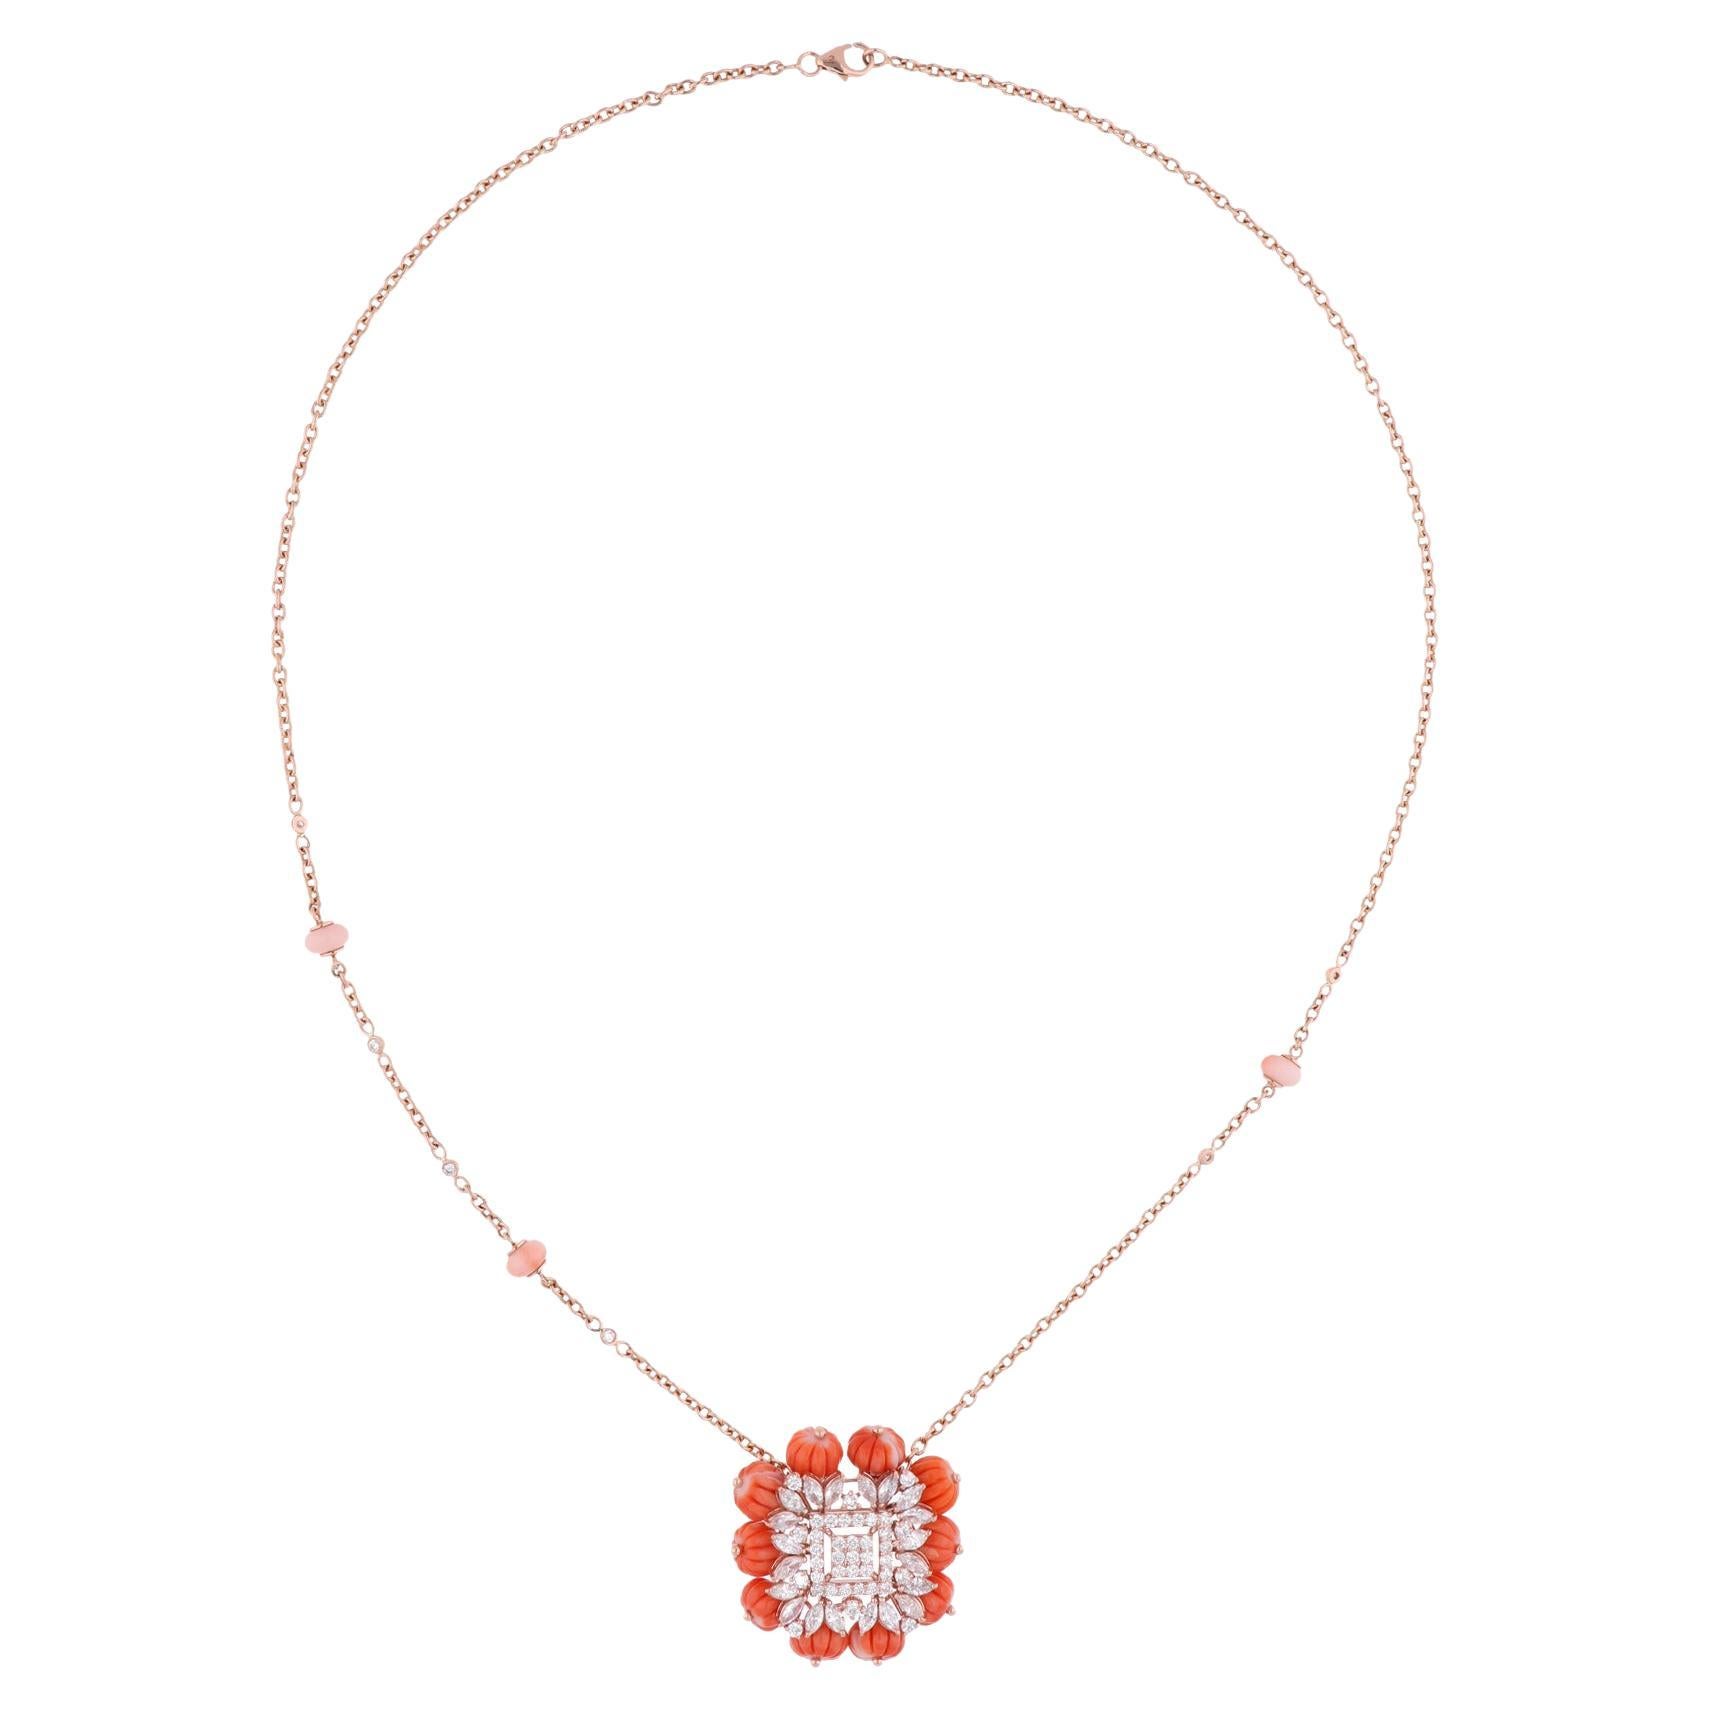 Coral Beads Gemstone Charm Pendant Necklace Diamond 18 Karat Rose Gold Jewelry